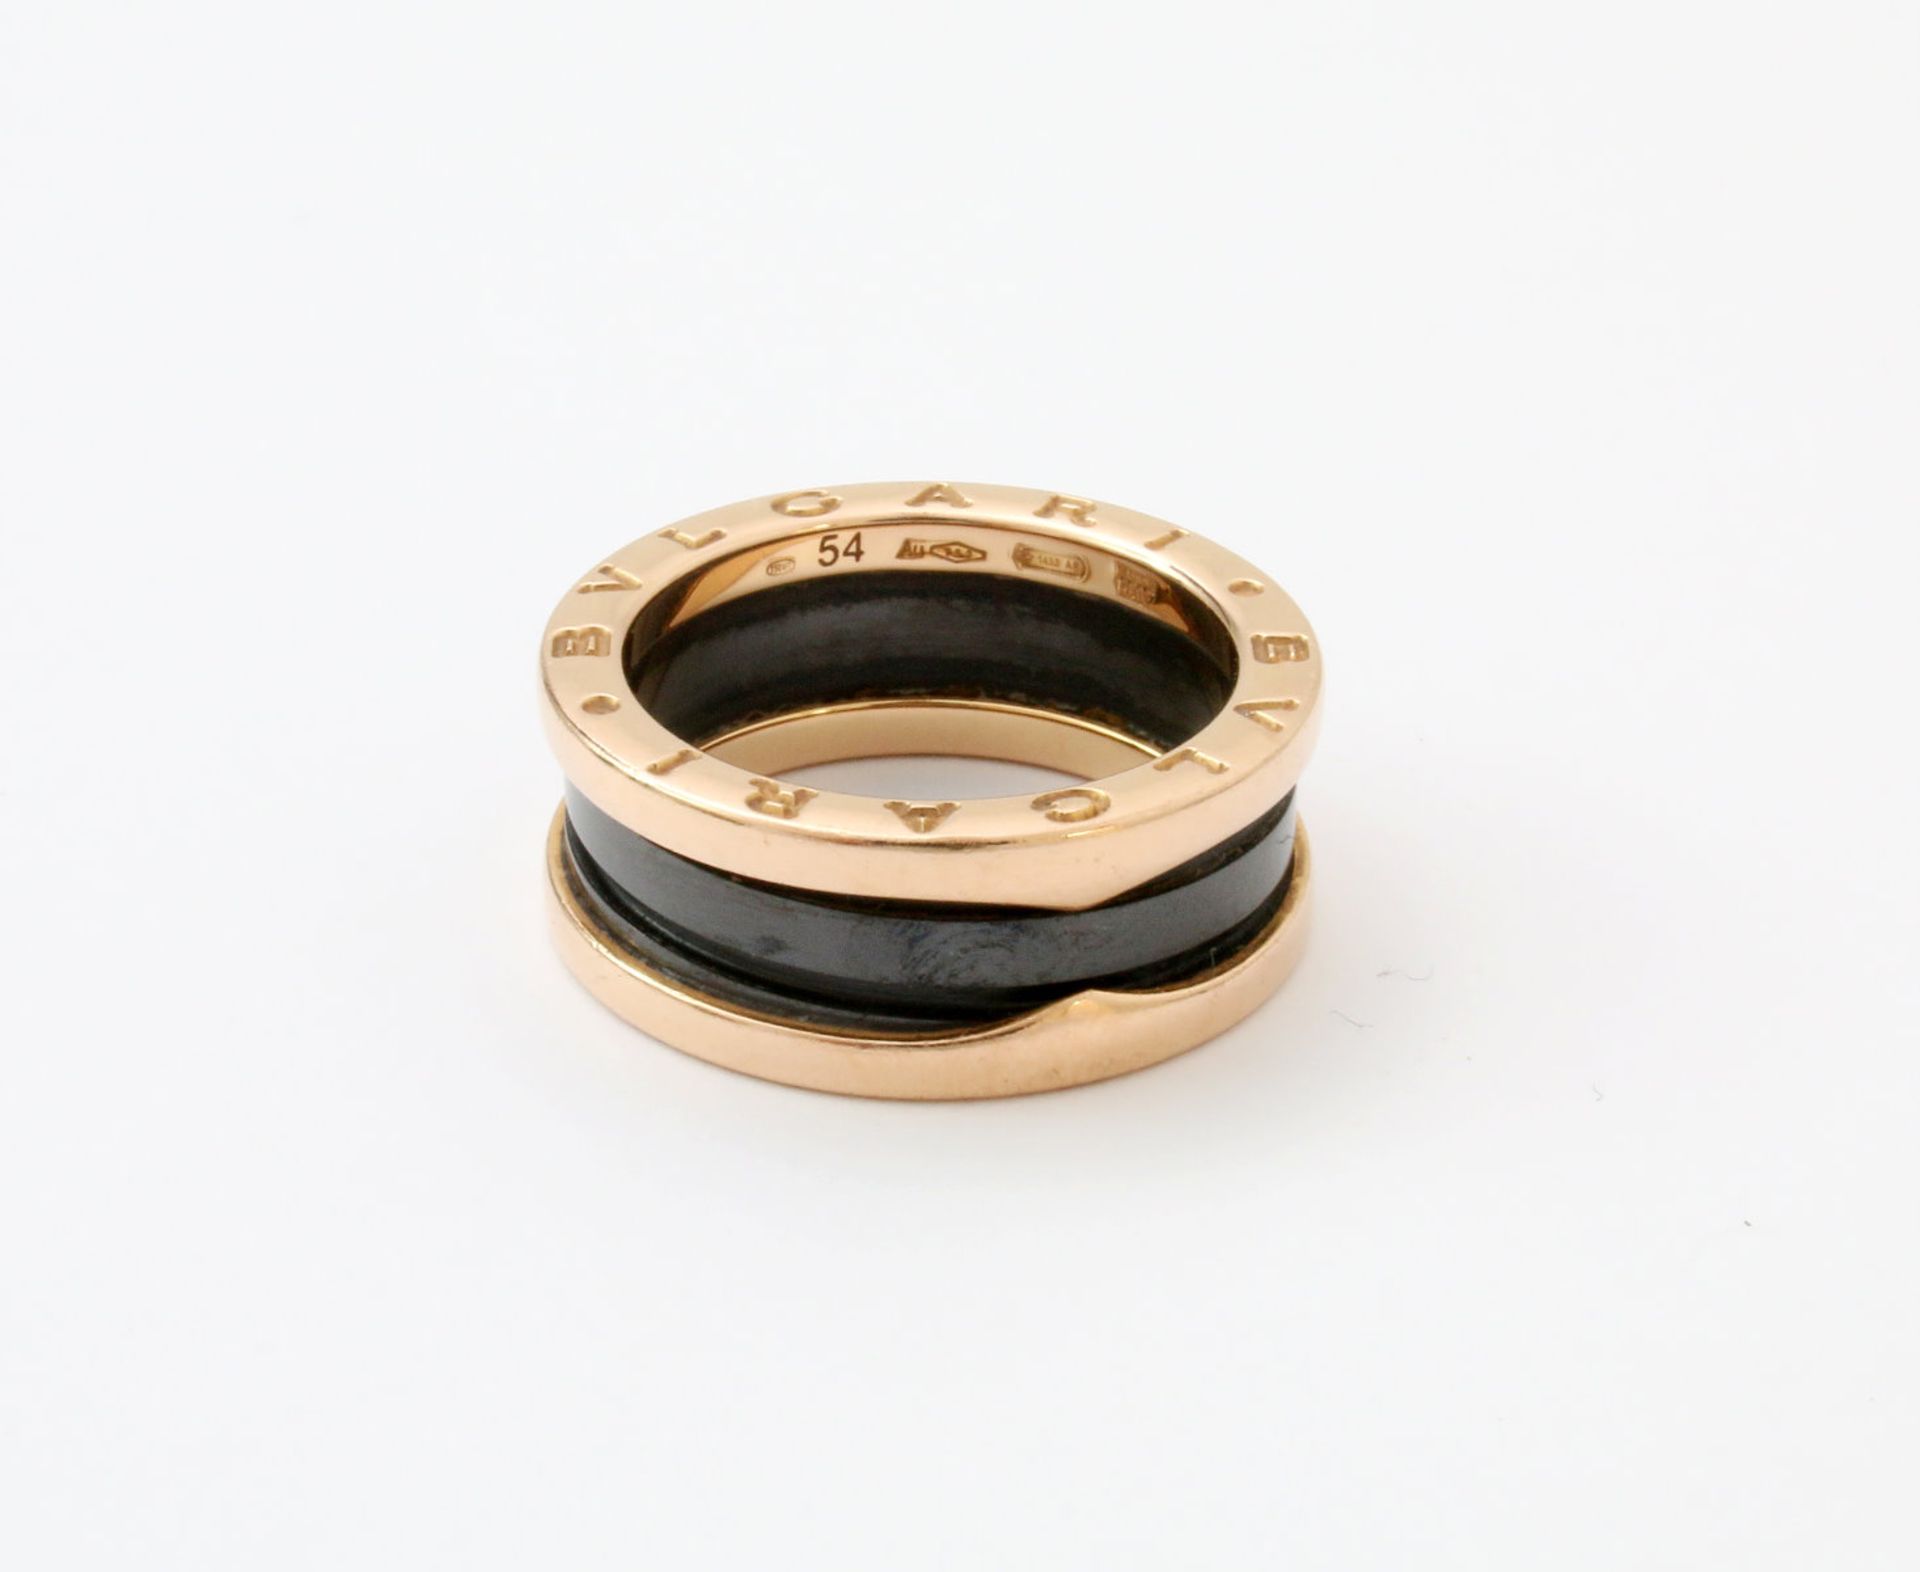 Rotgold Bulgari 2-Band Ring "B zero 1" RG 750, innen 2 Spiralen aus schwarzer Keramik, aktuelles